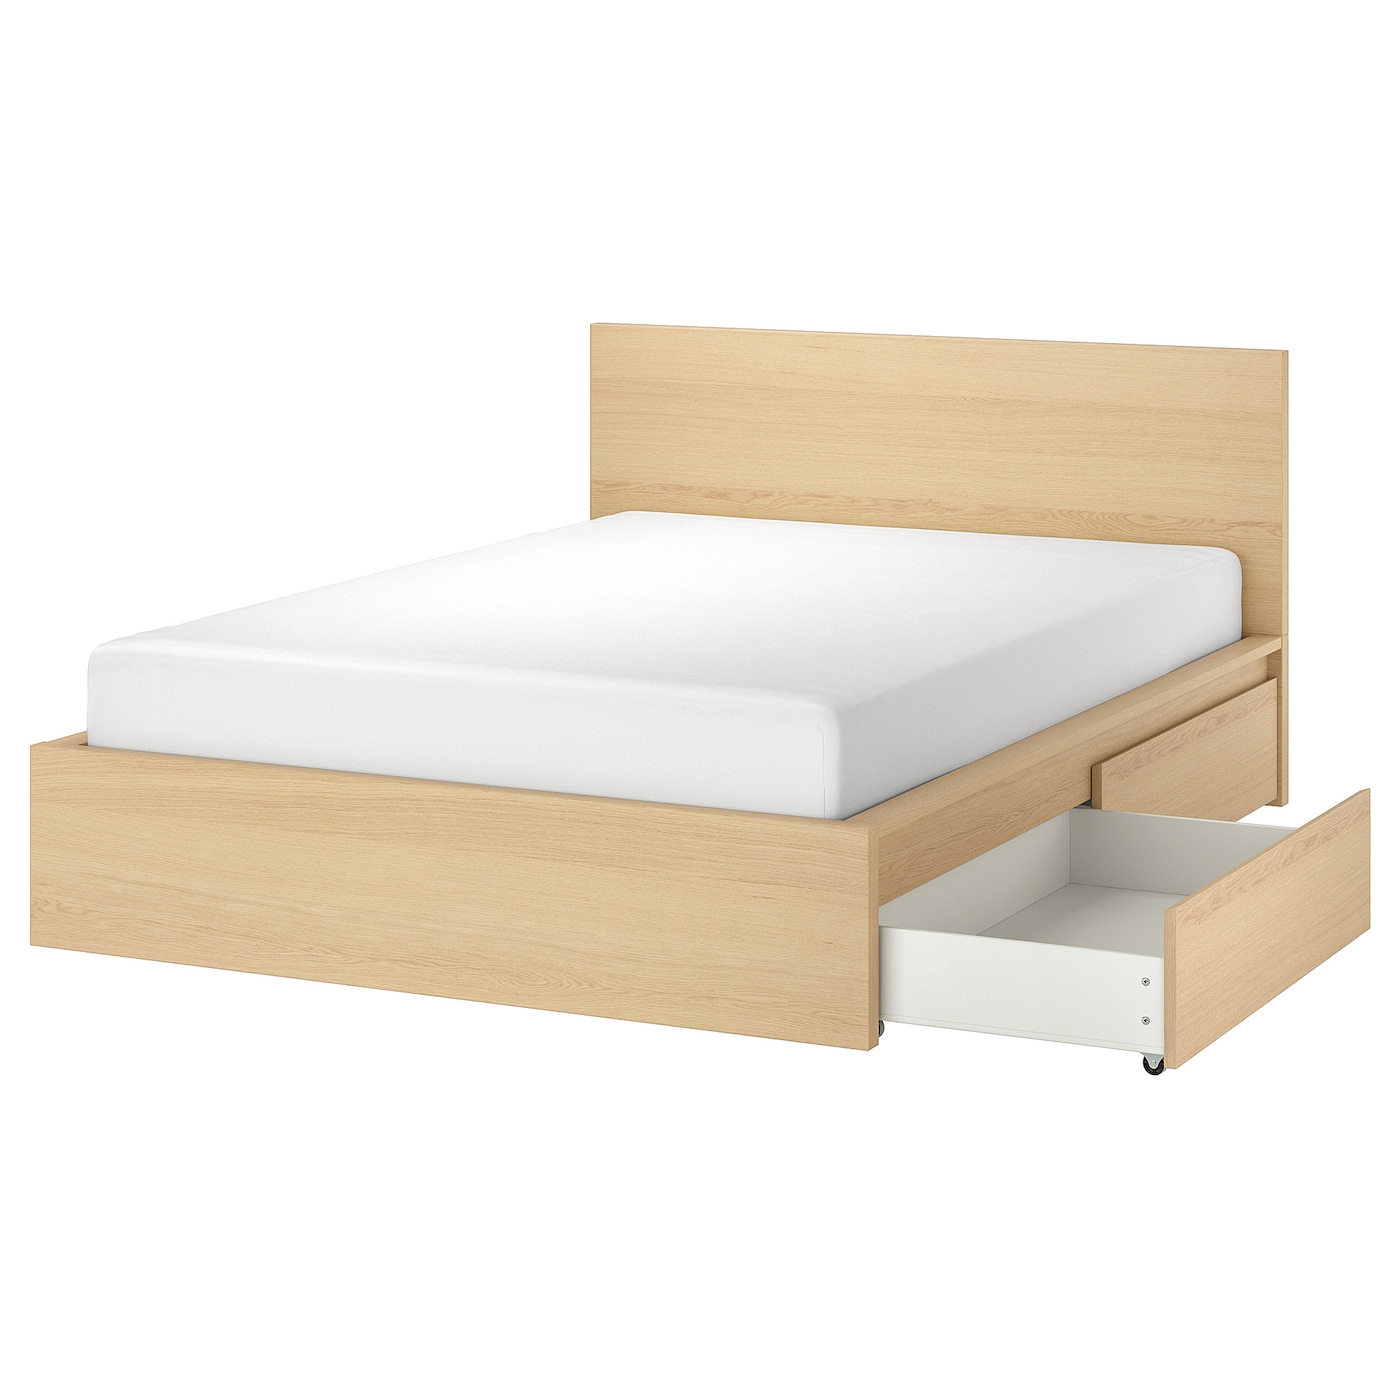 Каркас кровати с 4 ящиками для хранения - IKEA MALM, 200х160 см, шпон беленого мореного дуба, МАЛЬМ ИКЕА